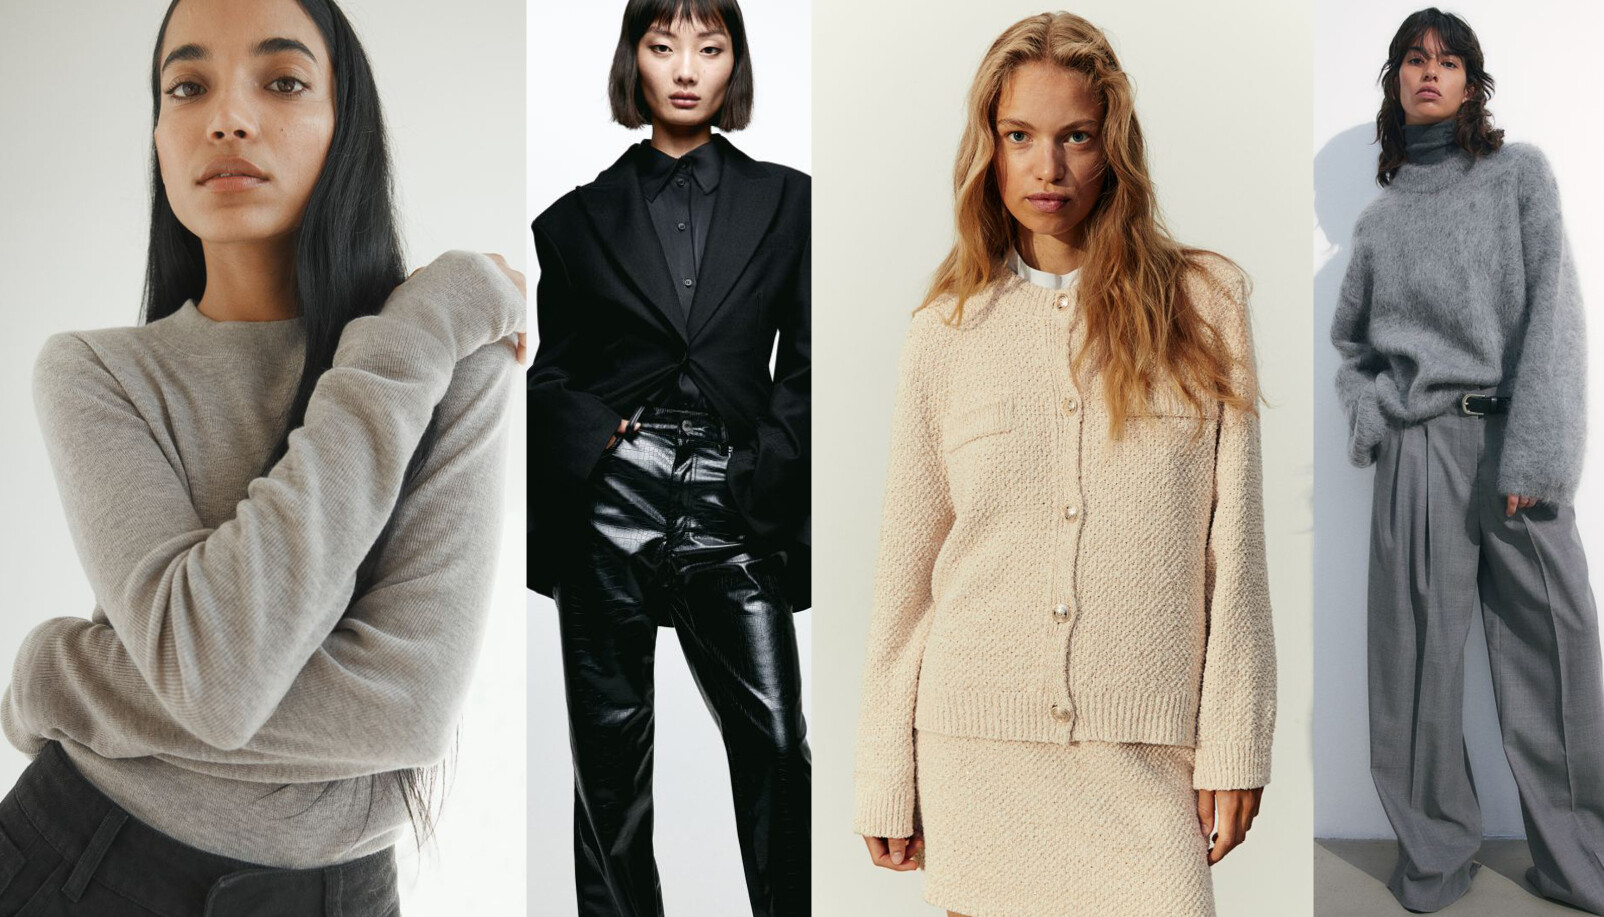 H&M fashion items vrouwen modellen in kleding